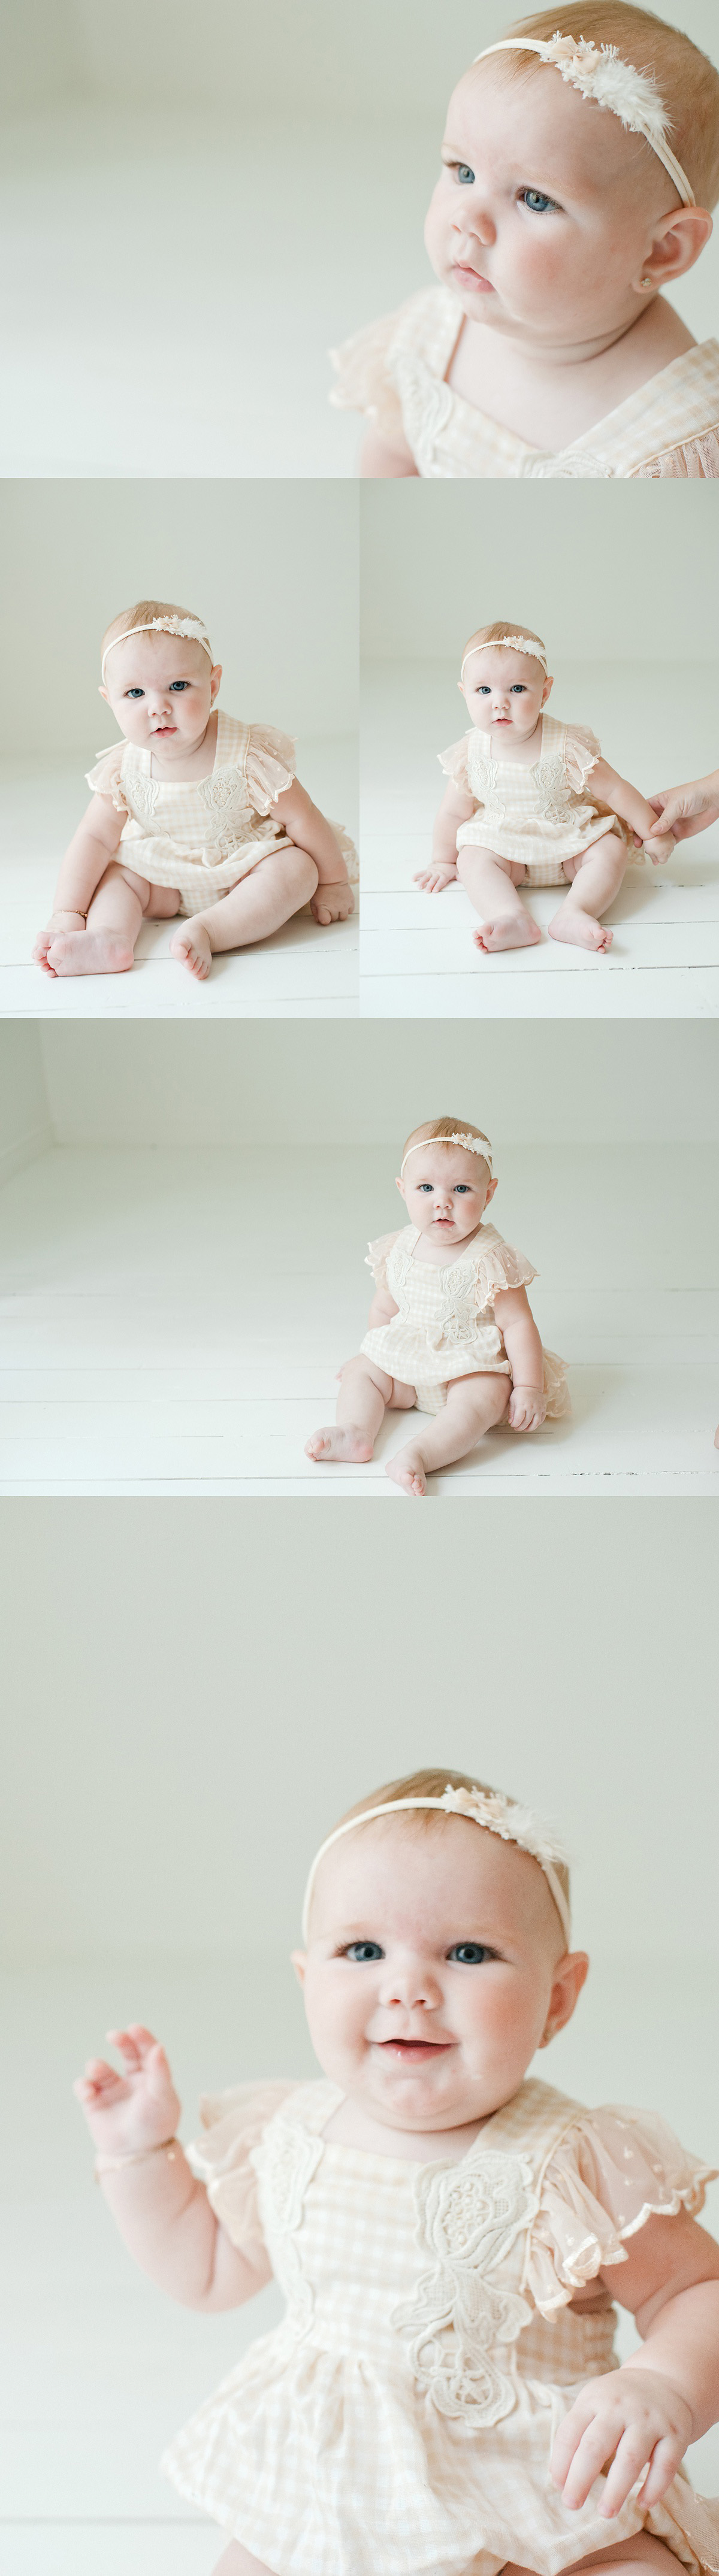 beautiful baby girl photographed in studio